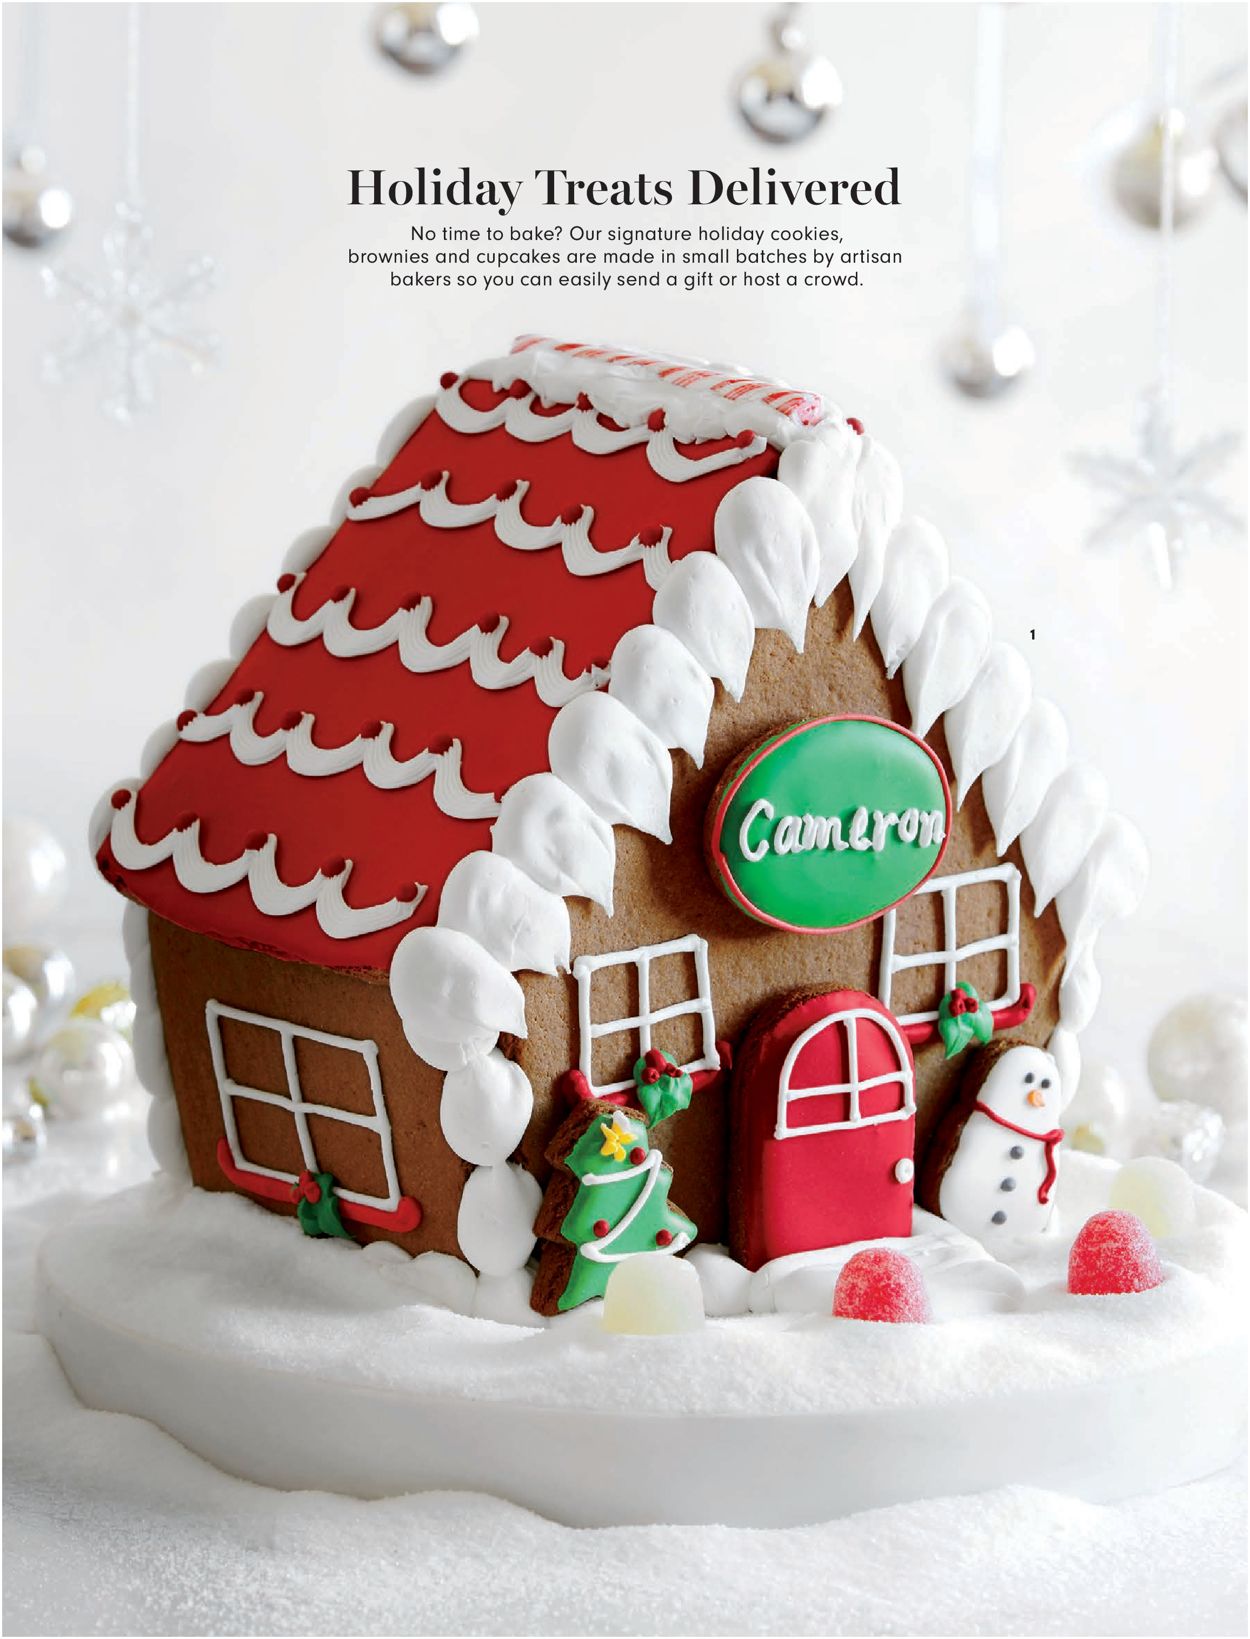 Catalogue Williams-Sonoma - Holidays Ad 2019 from 12/01/2019